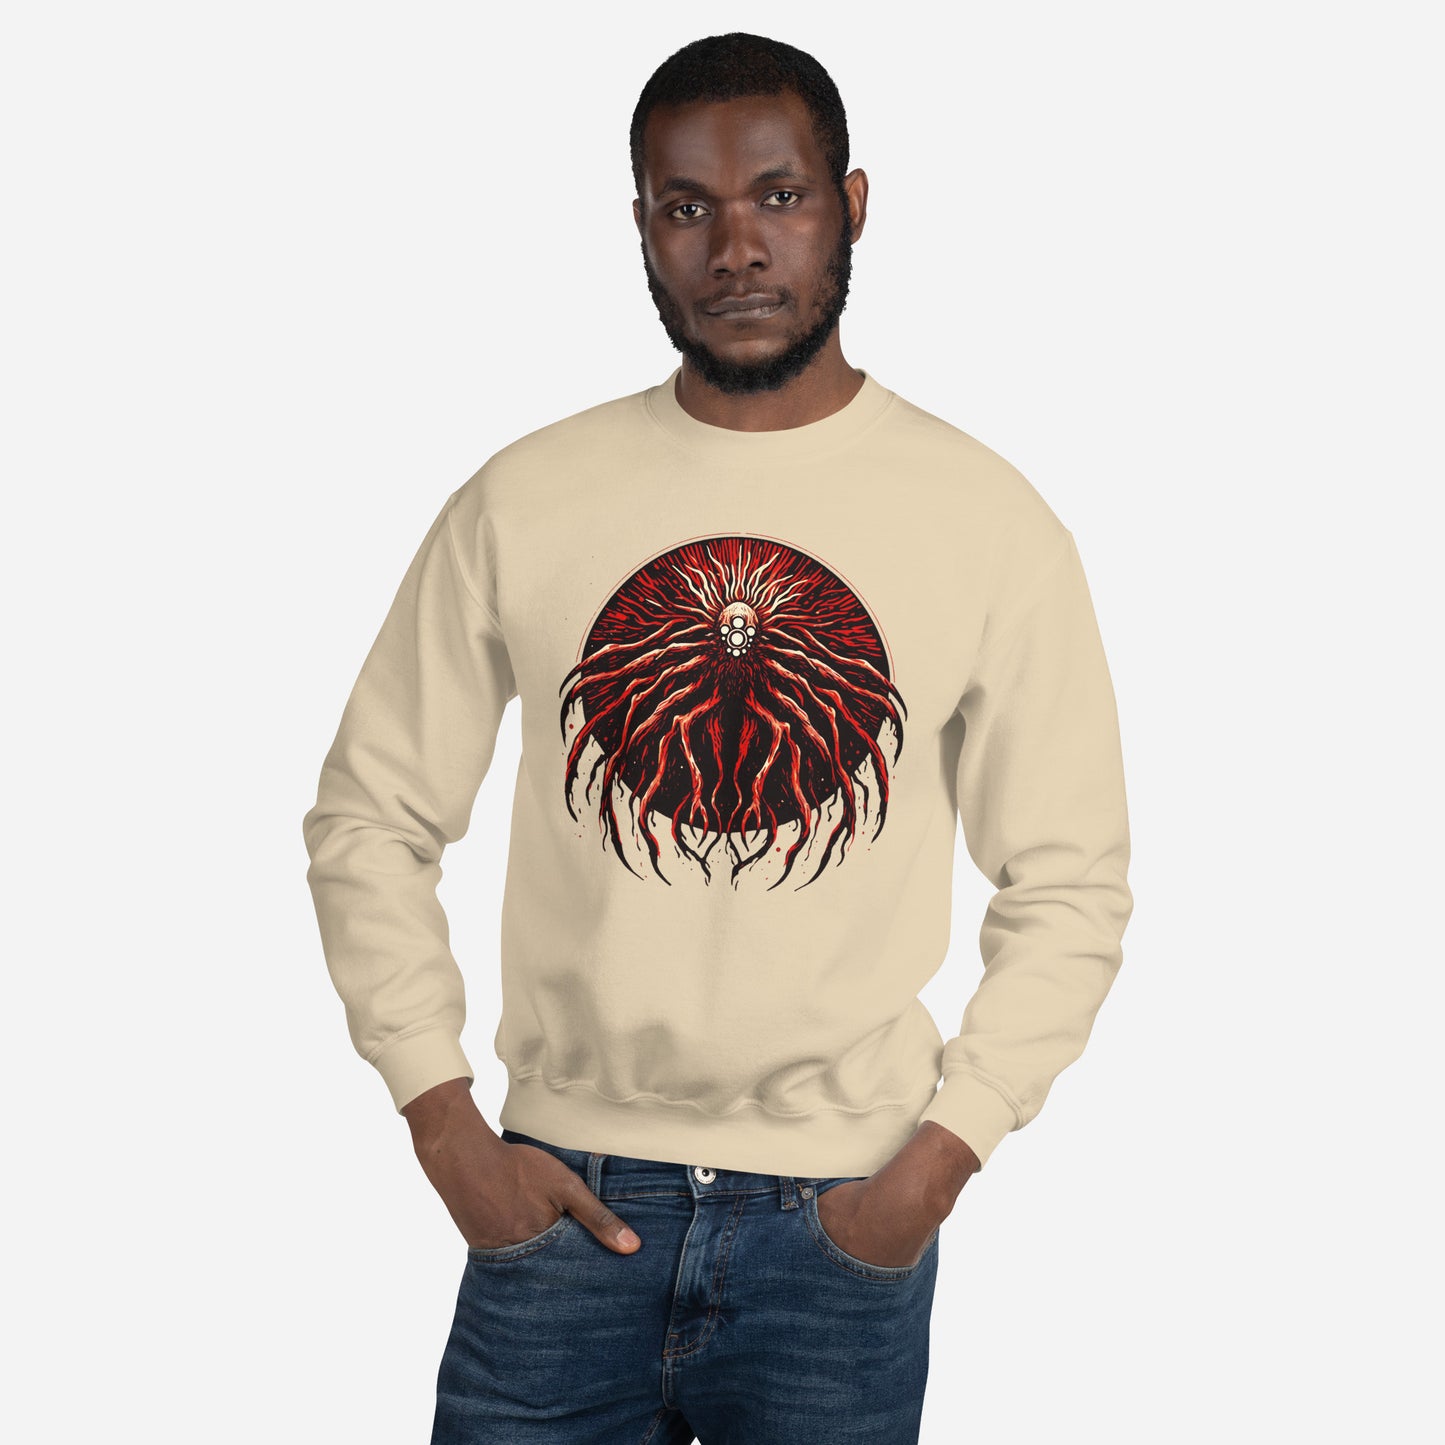 "arachon" unisex sweatshirt